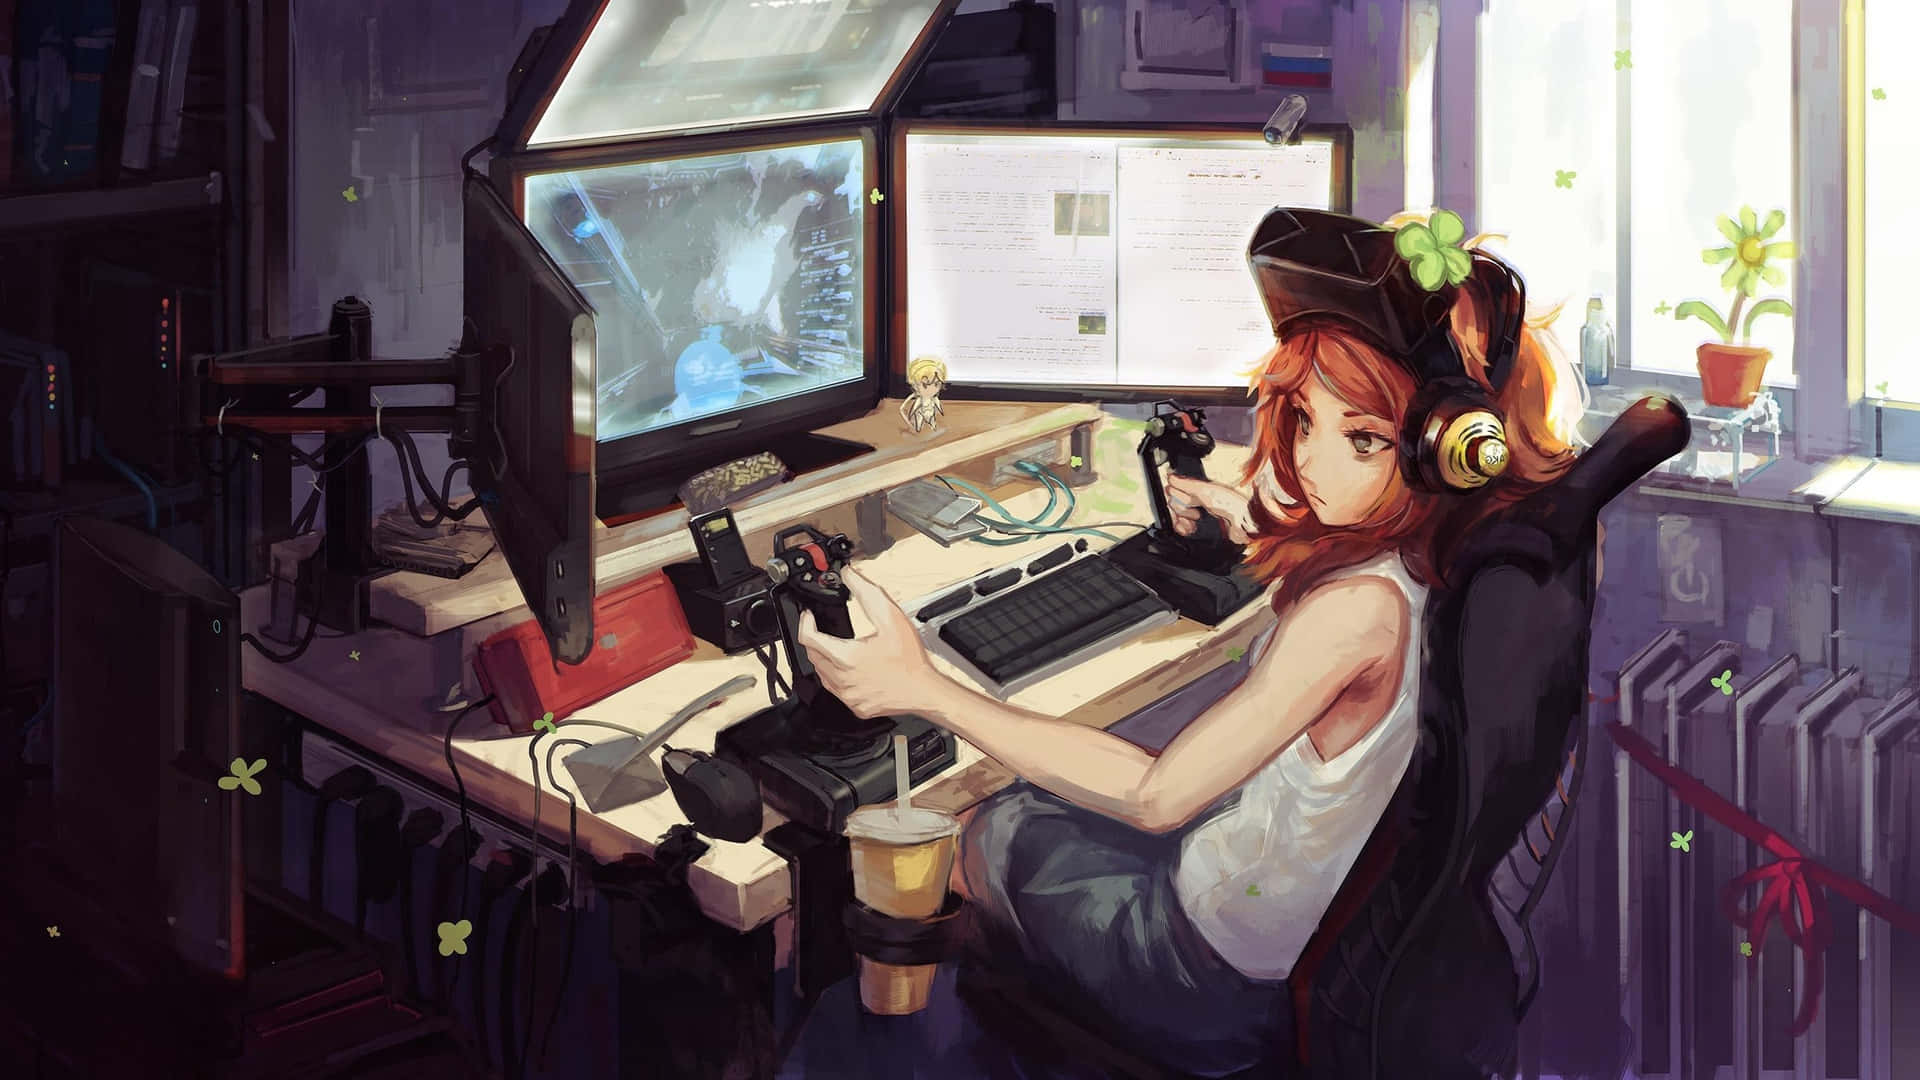 An anime-loving gamer enjoying the virtual world Wallpaper